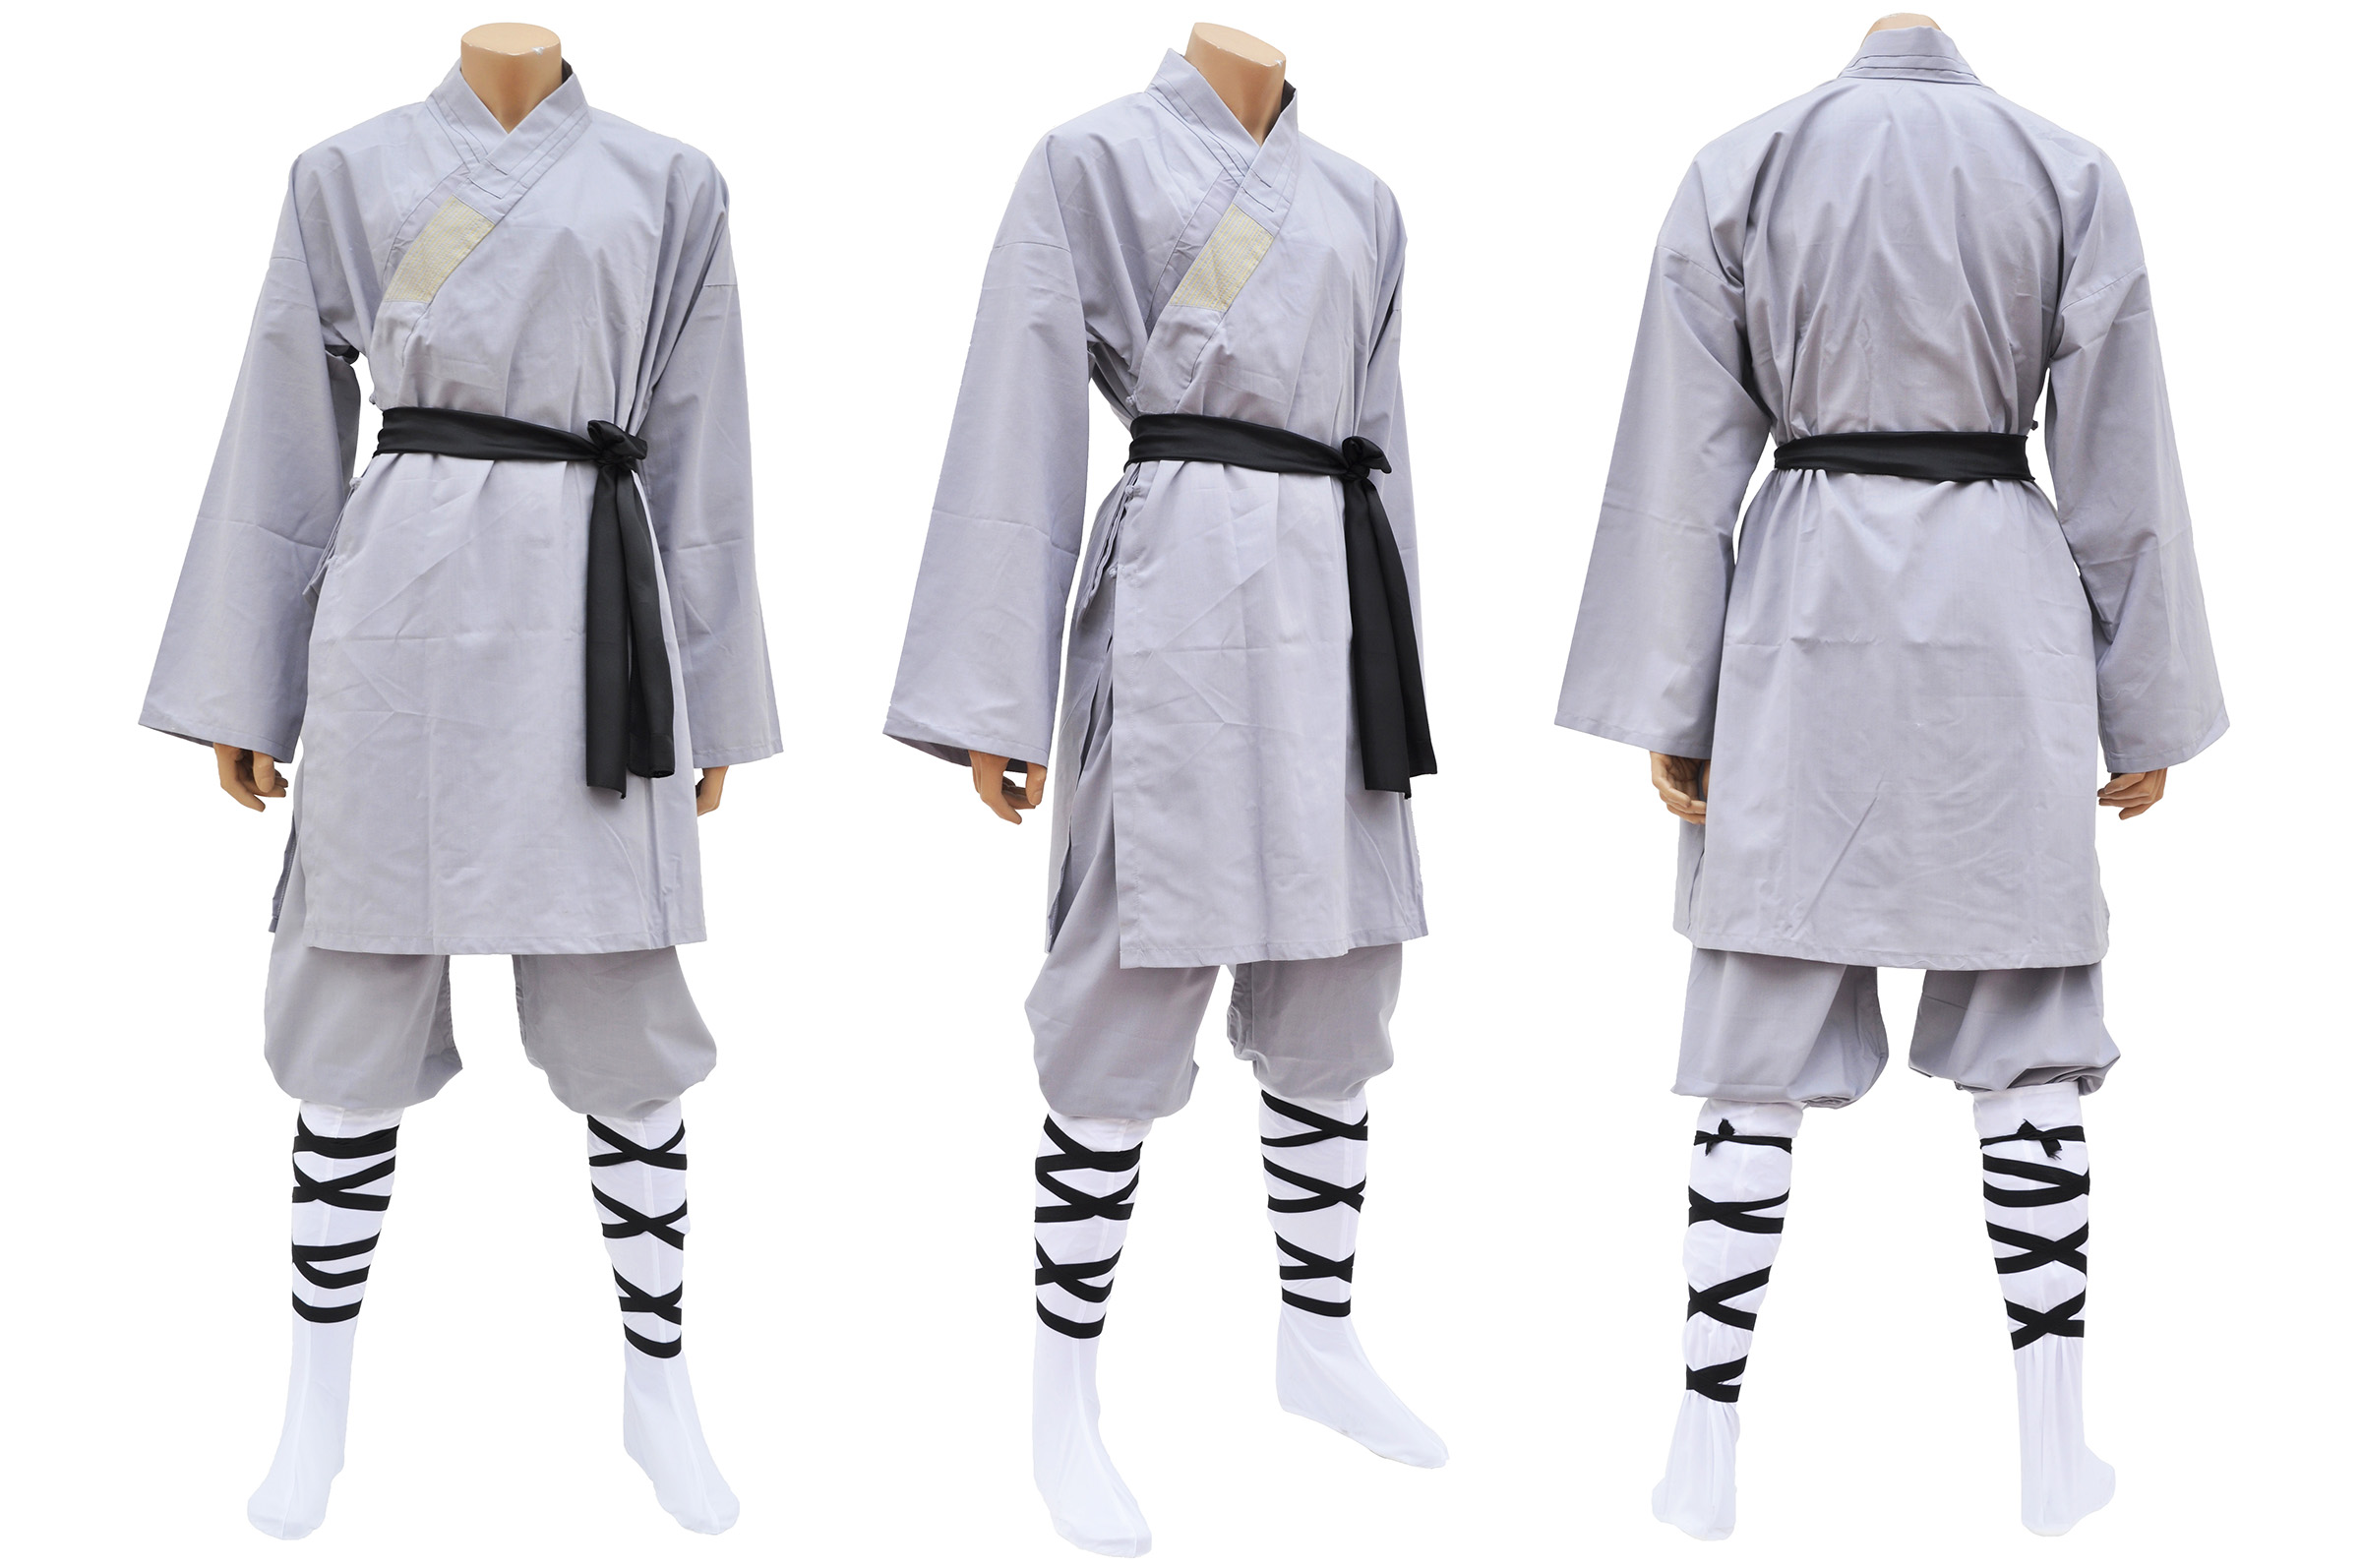 Uniforms to practice Kung-fu - DragonSports.eu